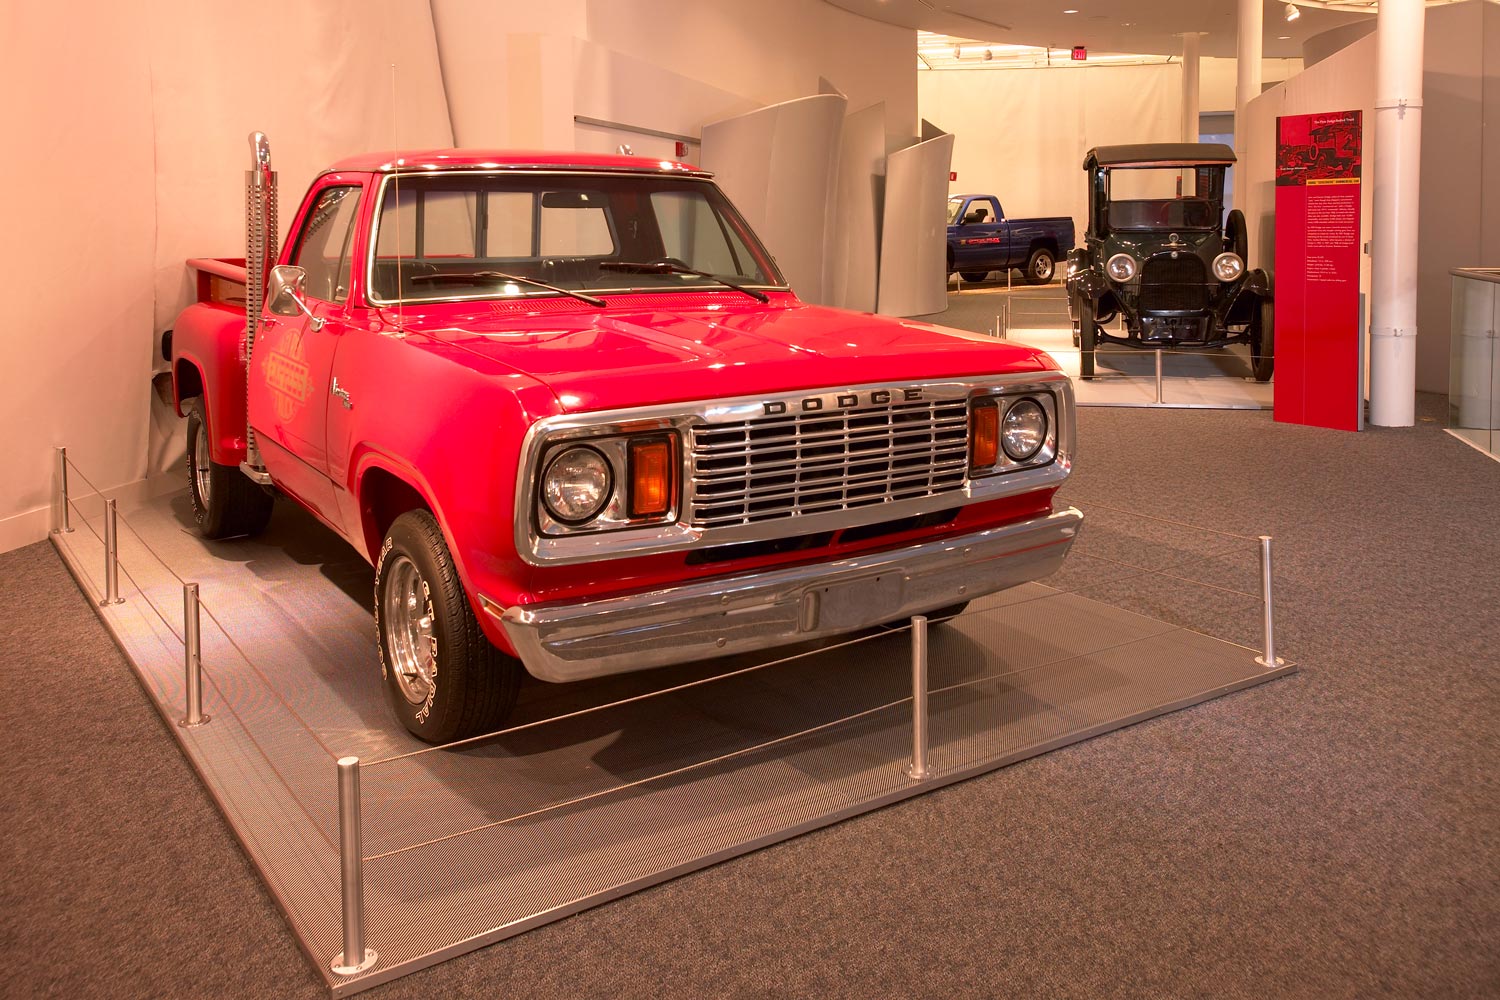  1979 Dodge Li'l Red Express truck displayed in auto museum